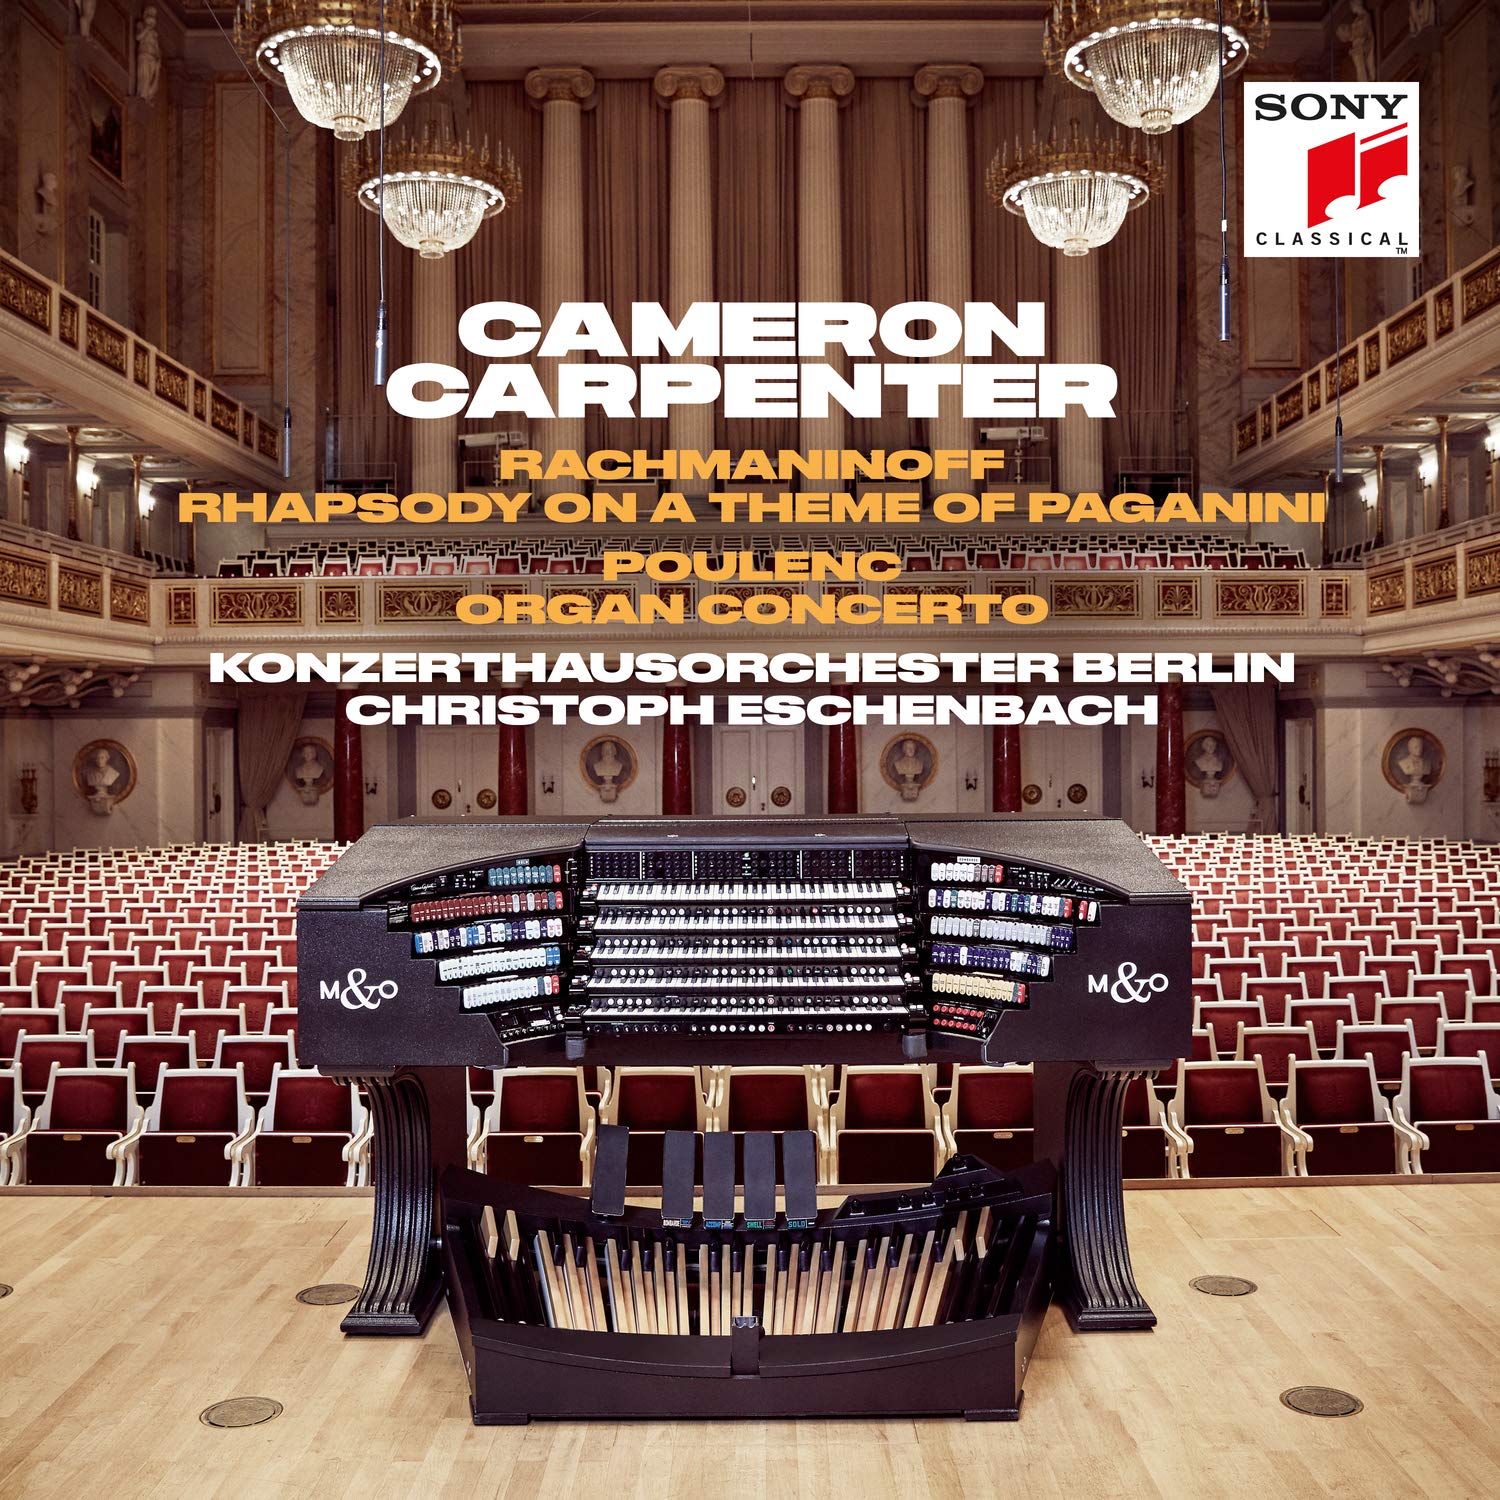 Rhapsody on a theme of Paganini | Cameron Carpenter